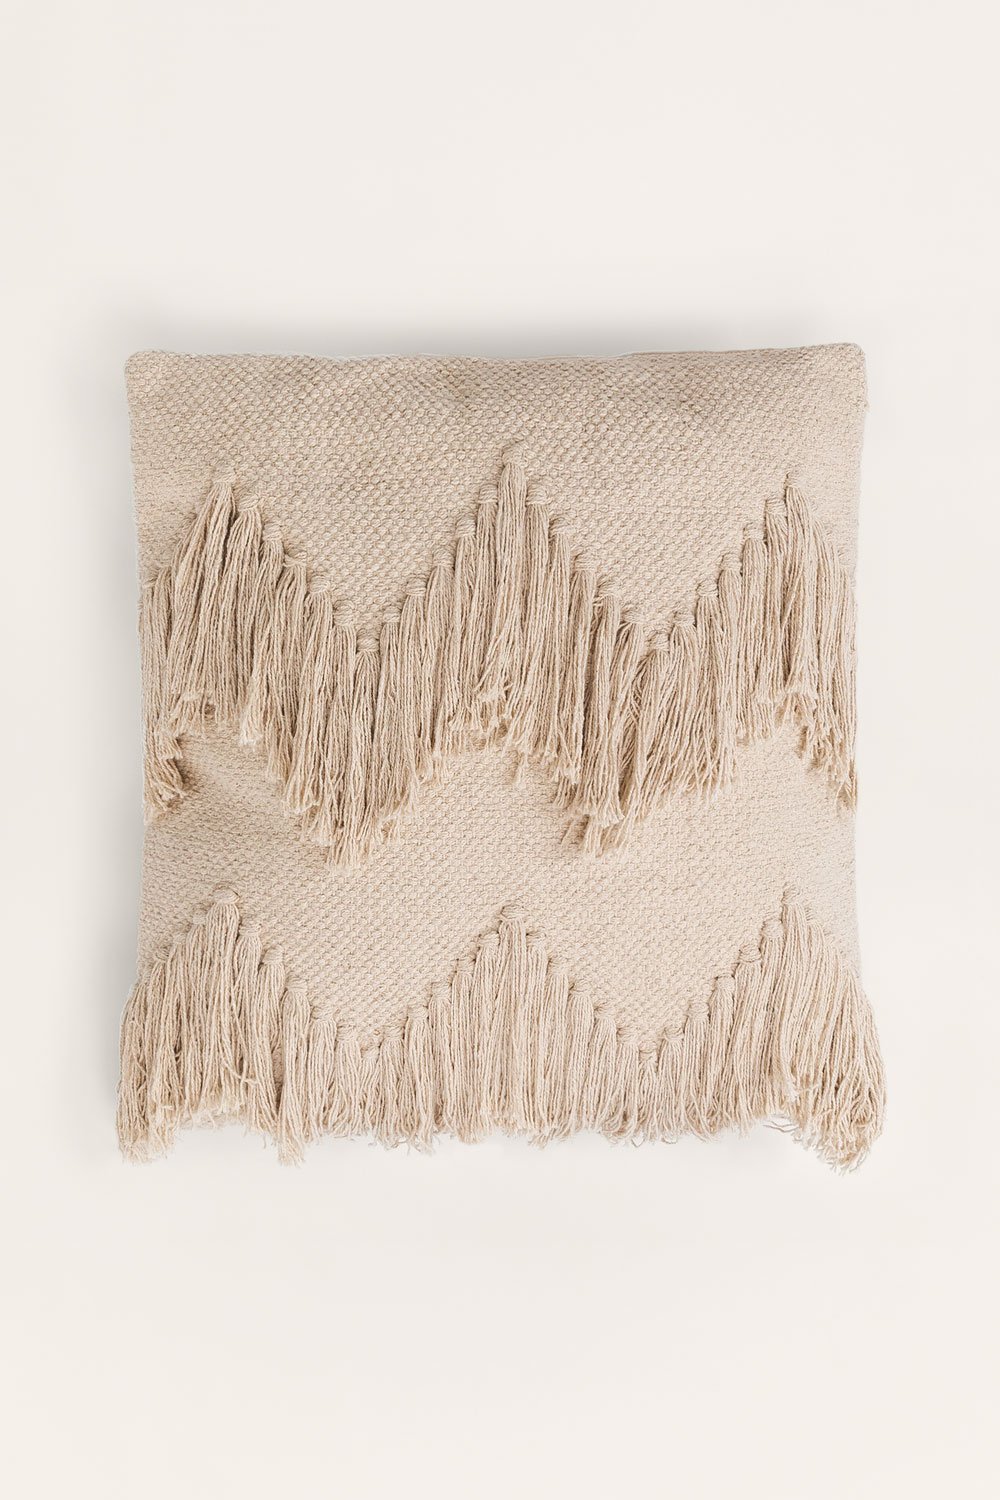 Square Cotton Cushion (45 x 45 cm) Winow, gallery image 1